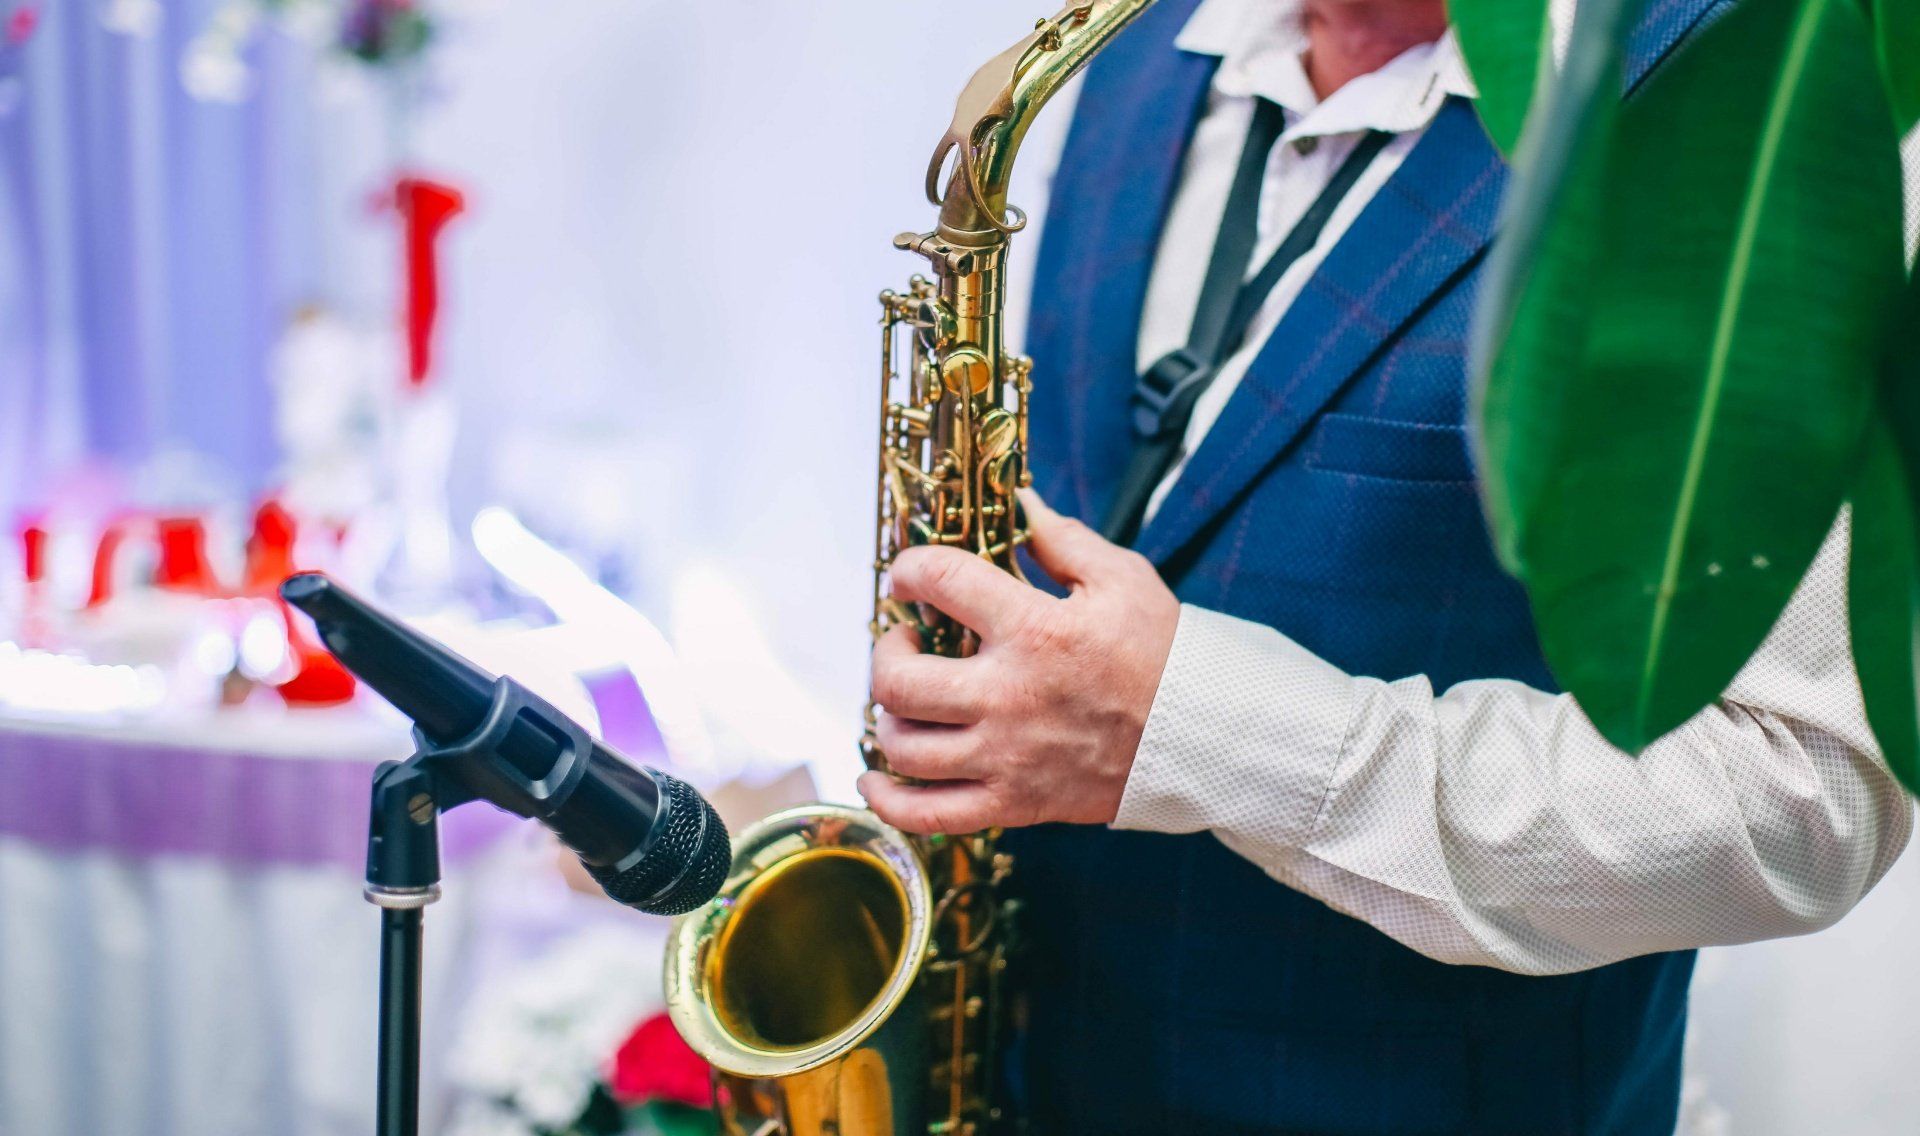 Saxophone playing at a wedding